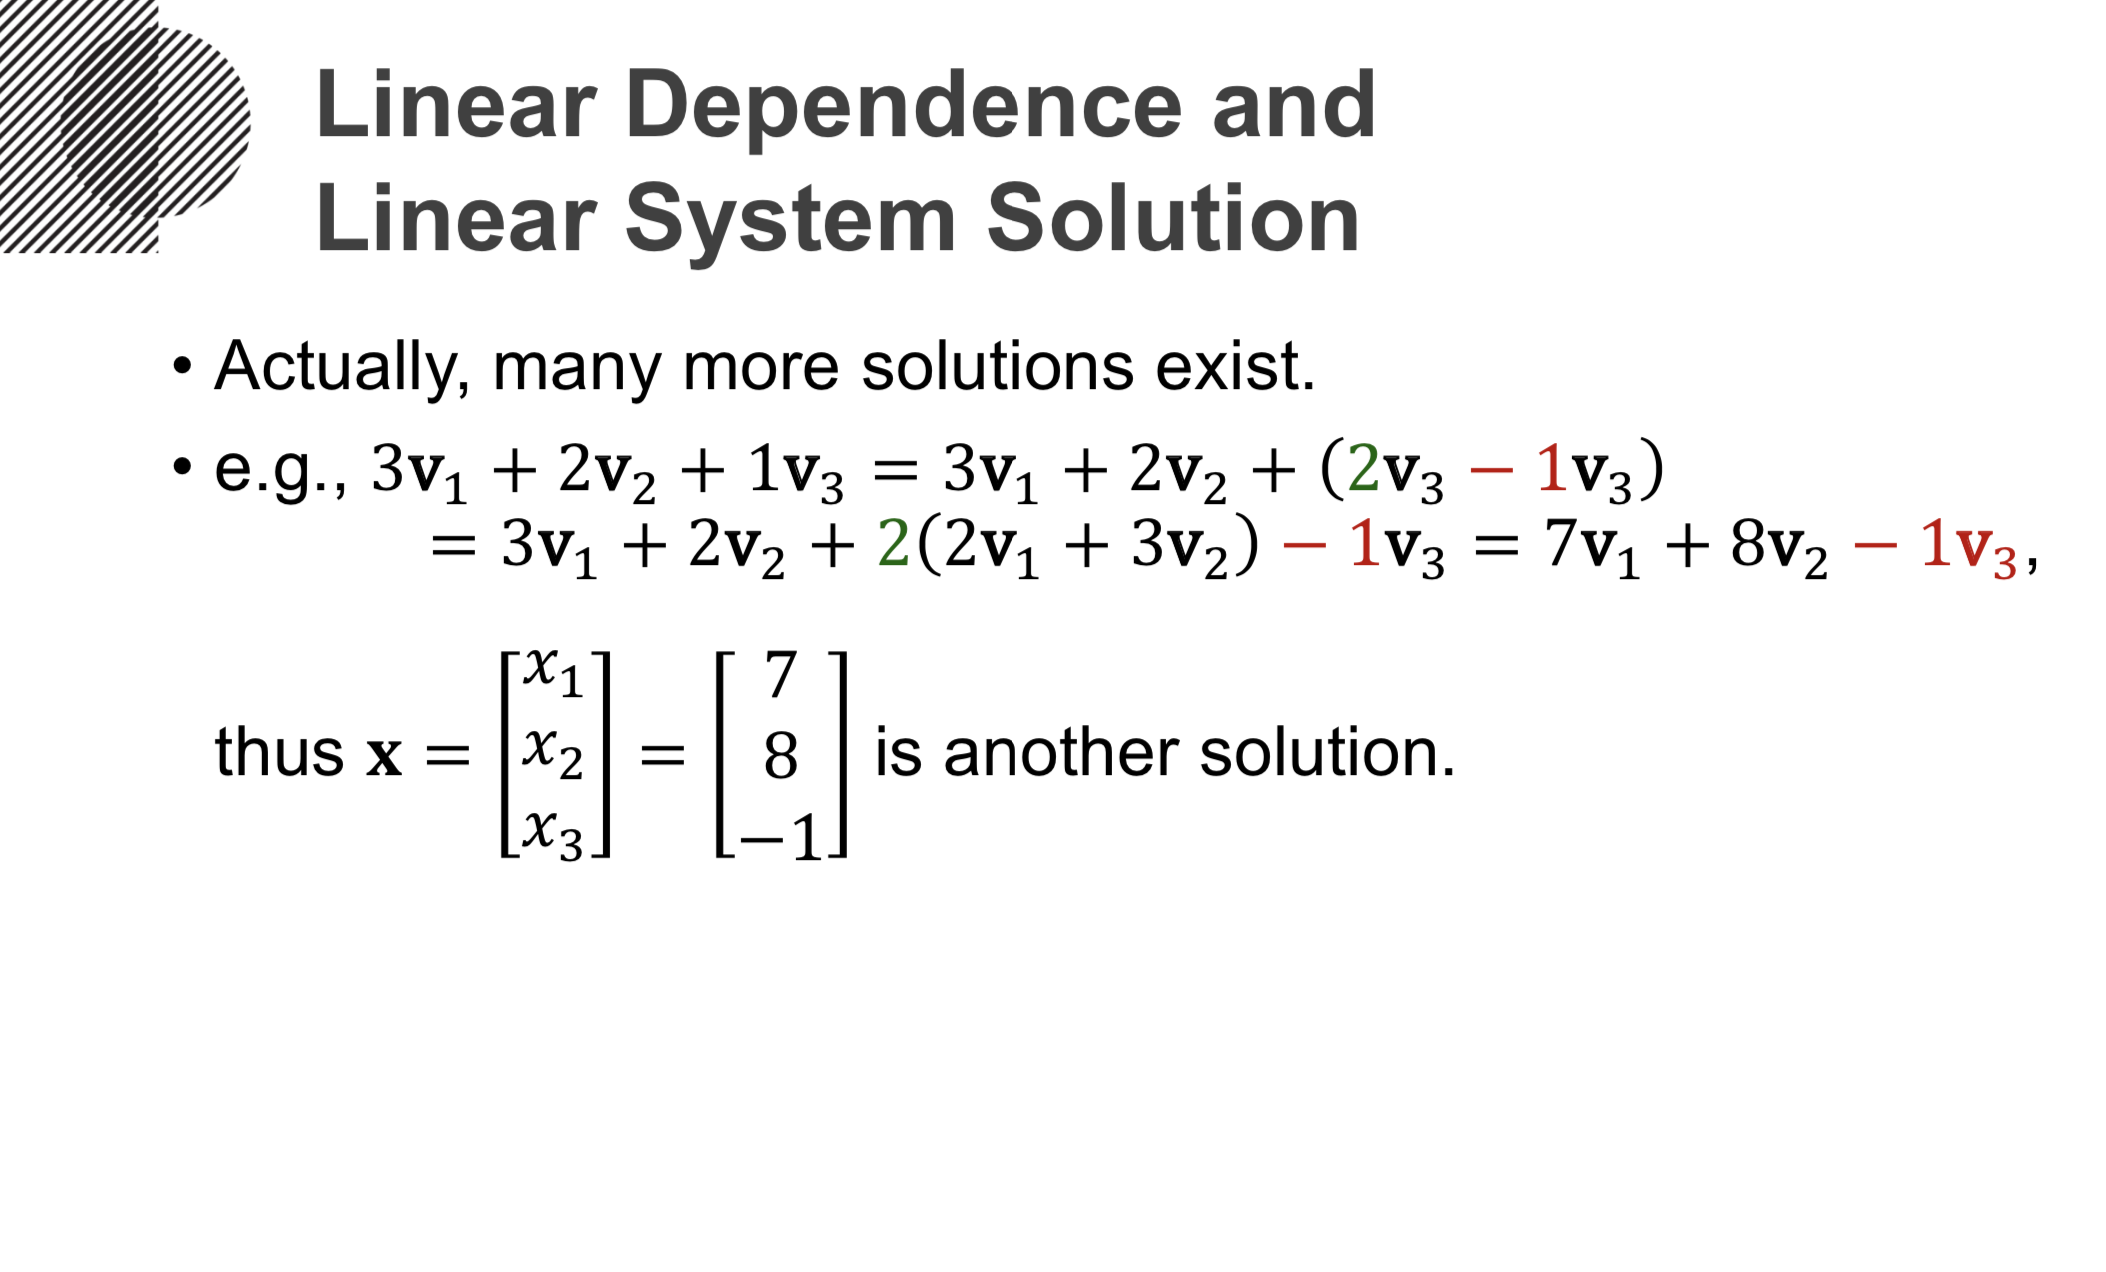 Linear dependent와 solution의 관계 - 02